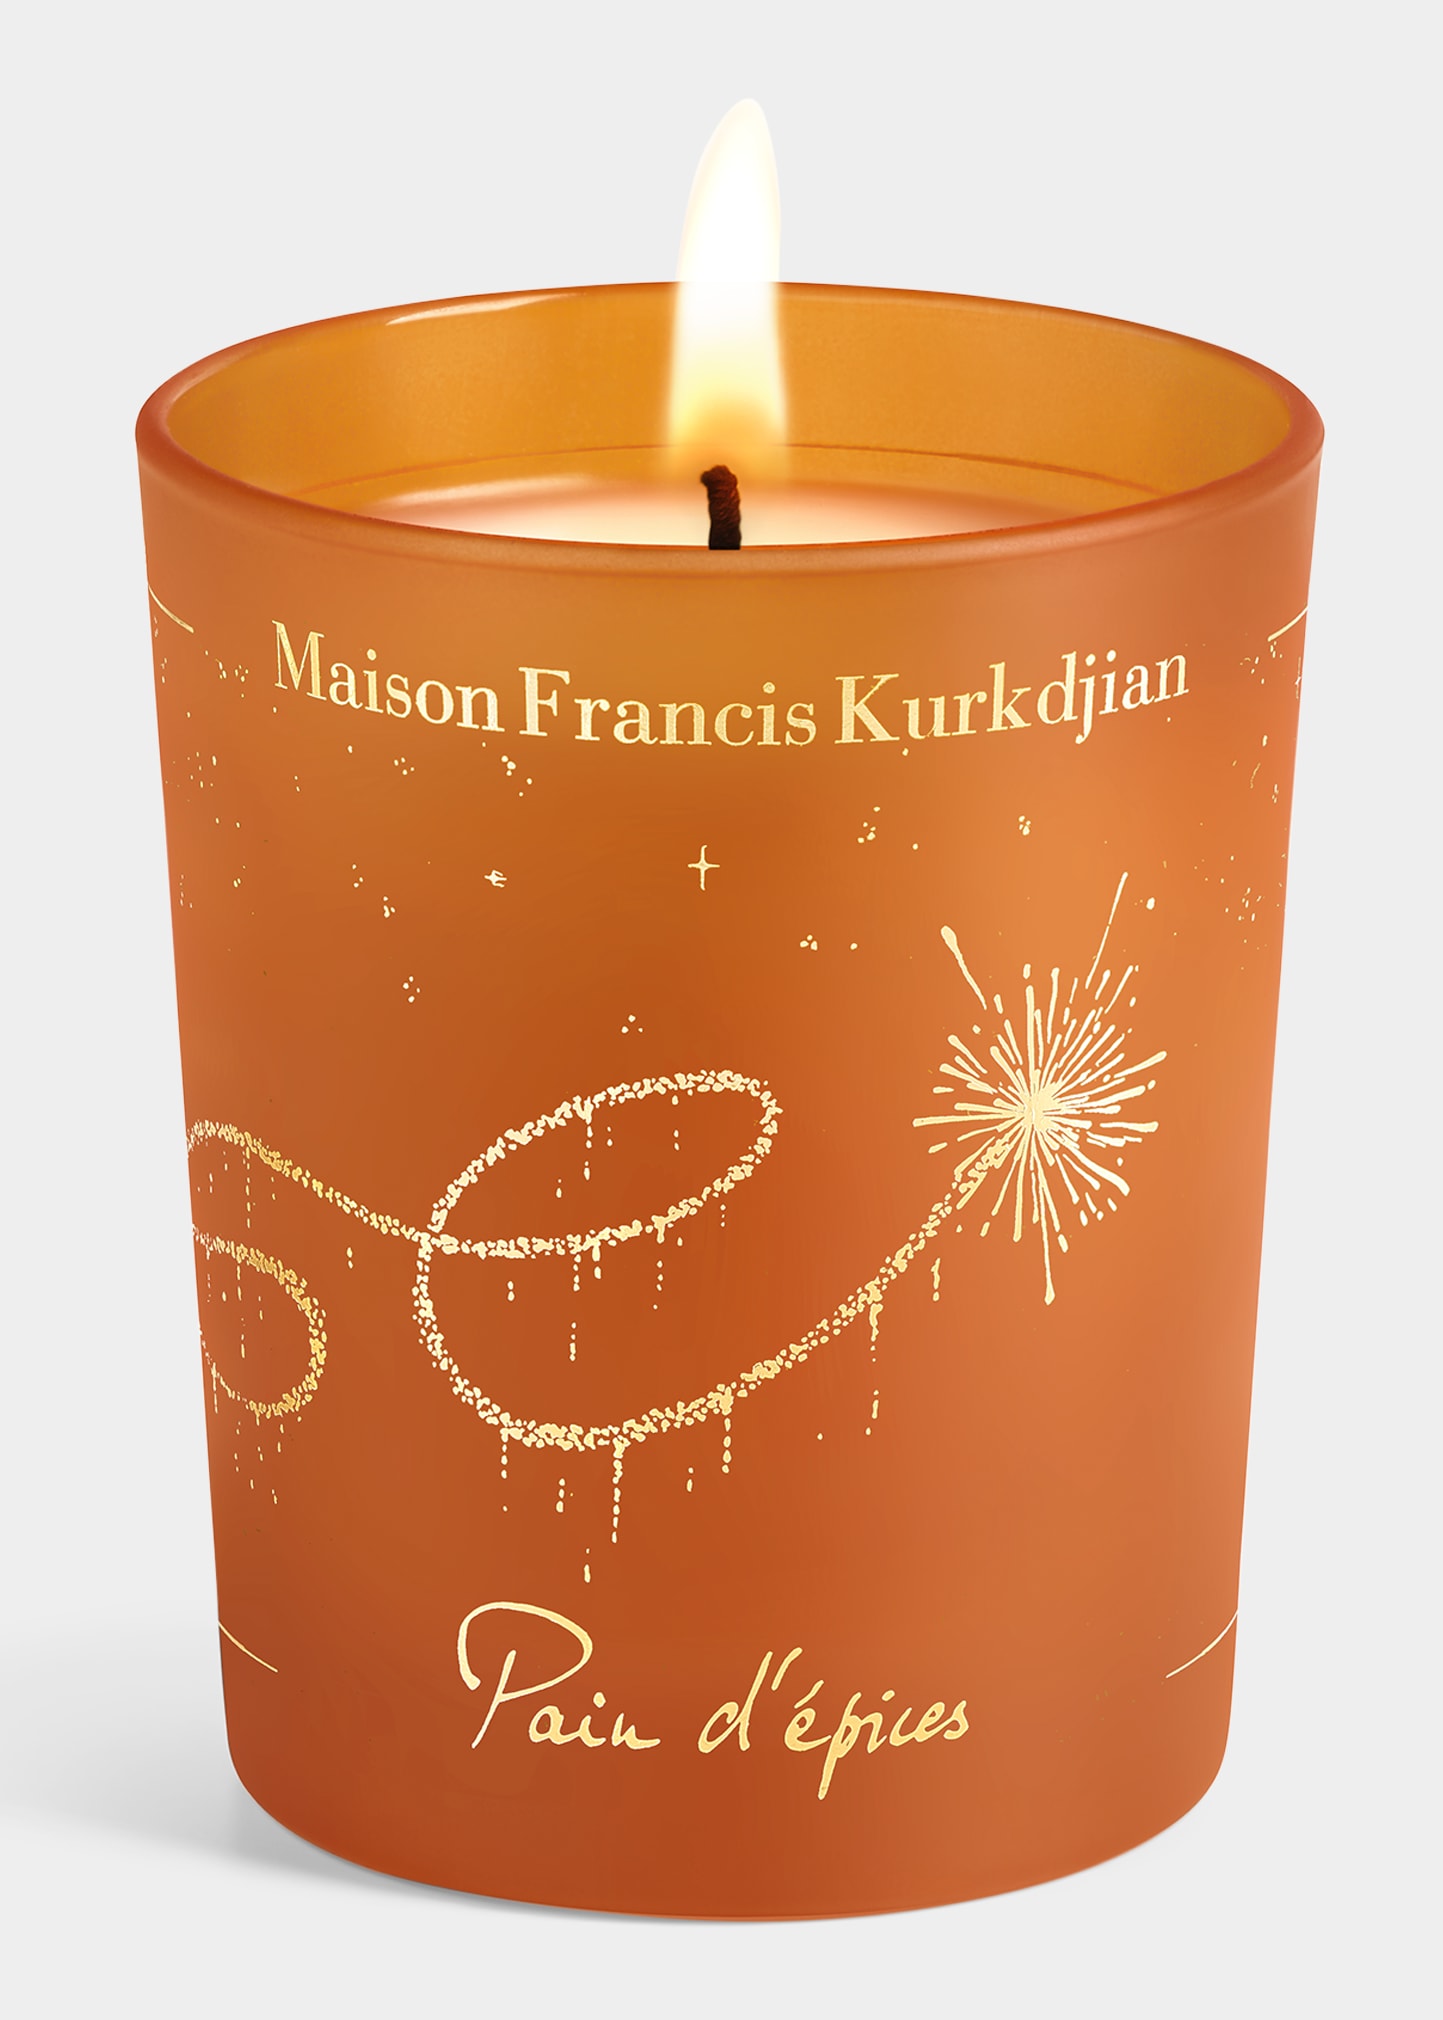 Maison Francis Kurkdjian Pain d'Spices Candle, 6.3 oz.